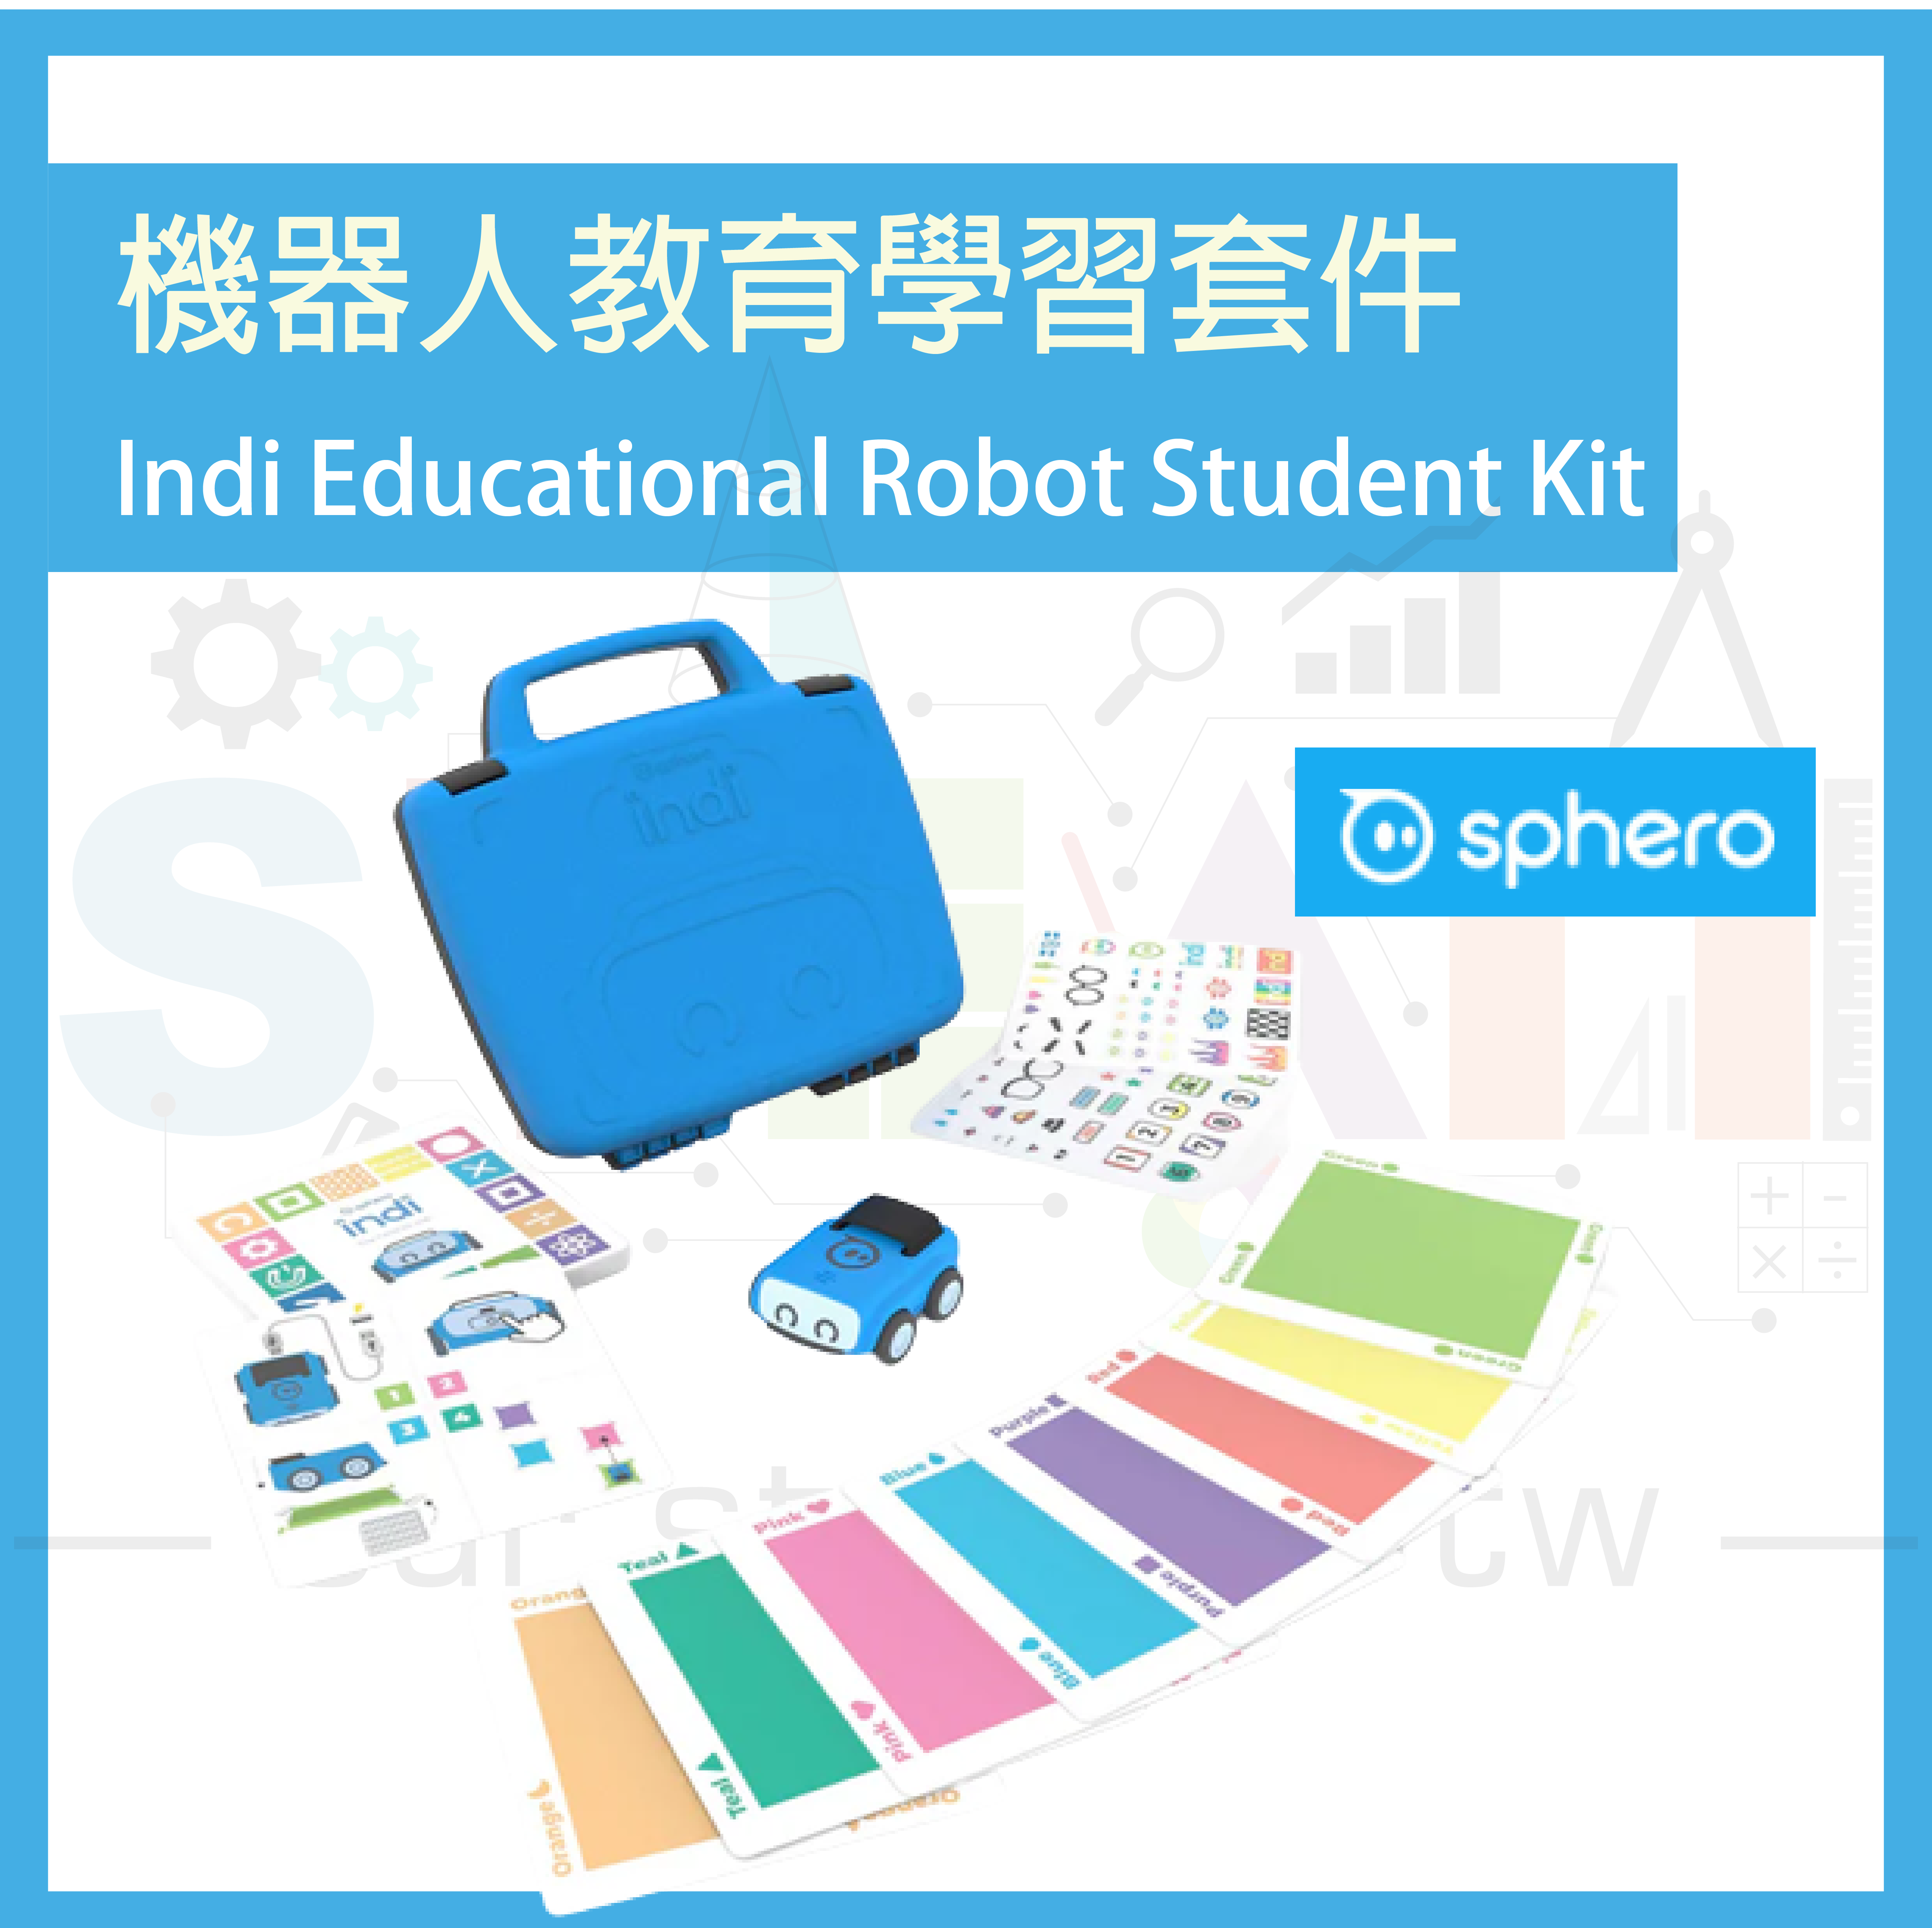 【SPR011】Sphero indi Educational Robot Student Kit 機器人學習套件